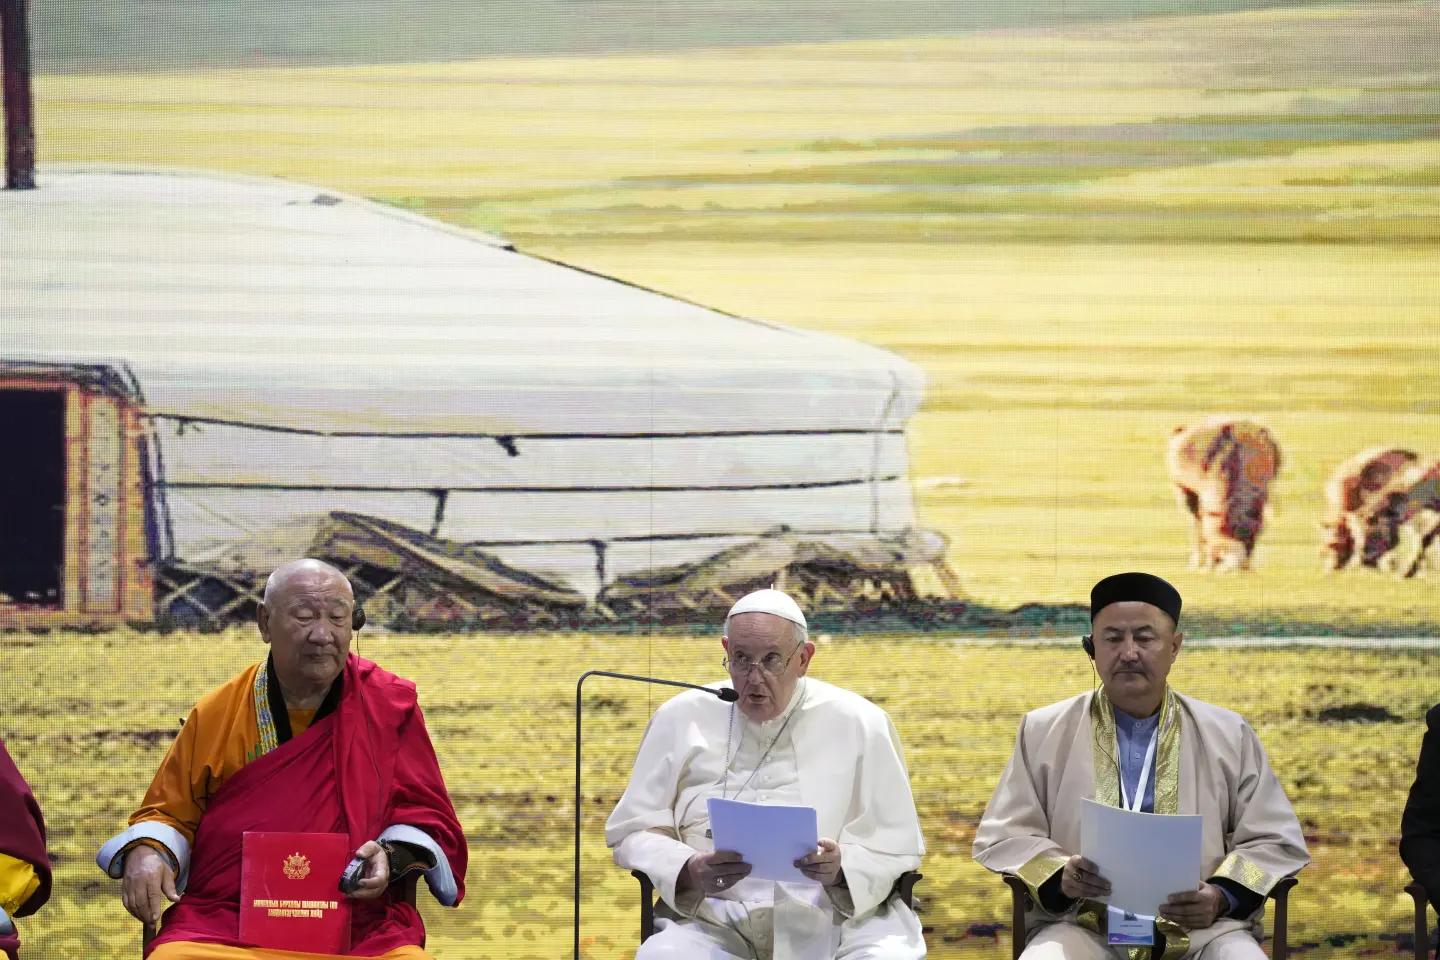 Against backdrop of vast Mongolian deserts, Pope says God is ‘fresh water’